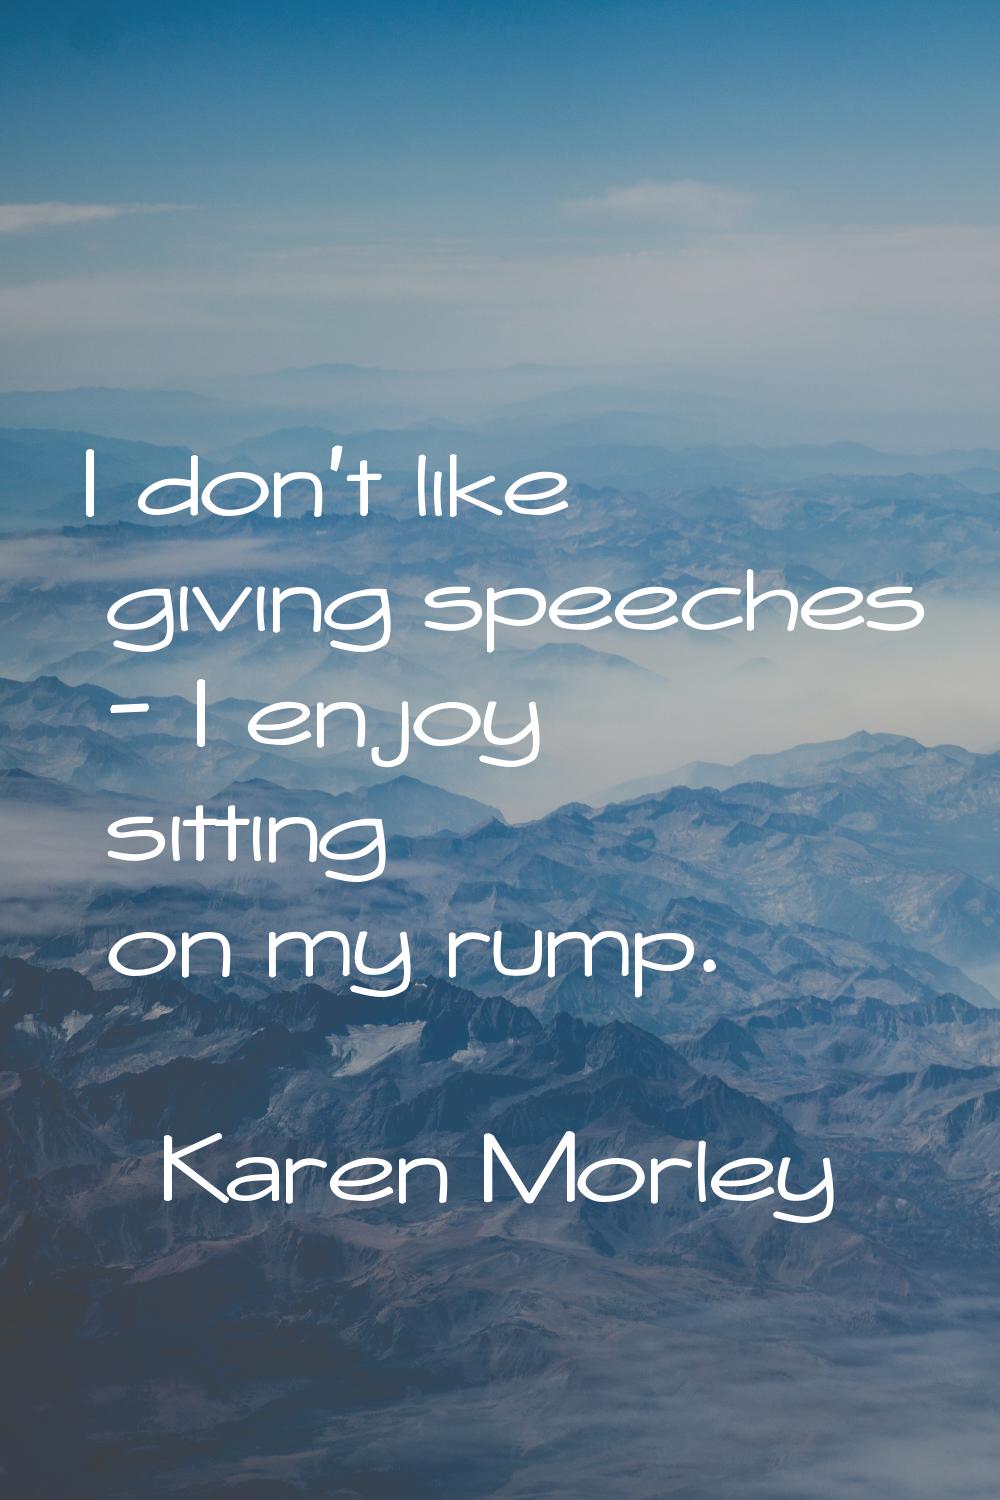 I don't like giving speeches - I enjoy sitting on my rump.